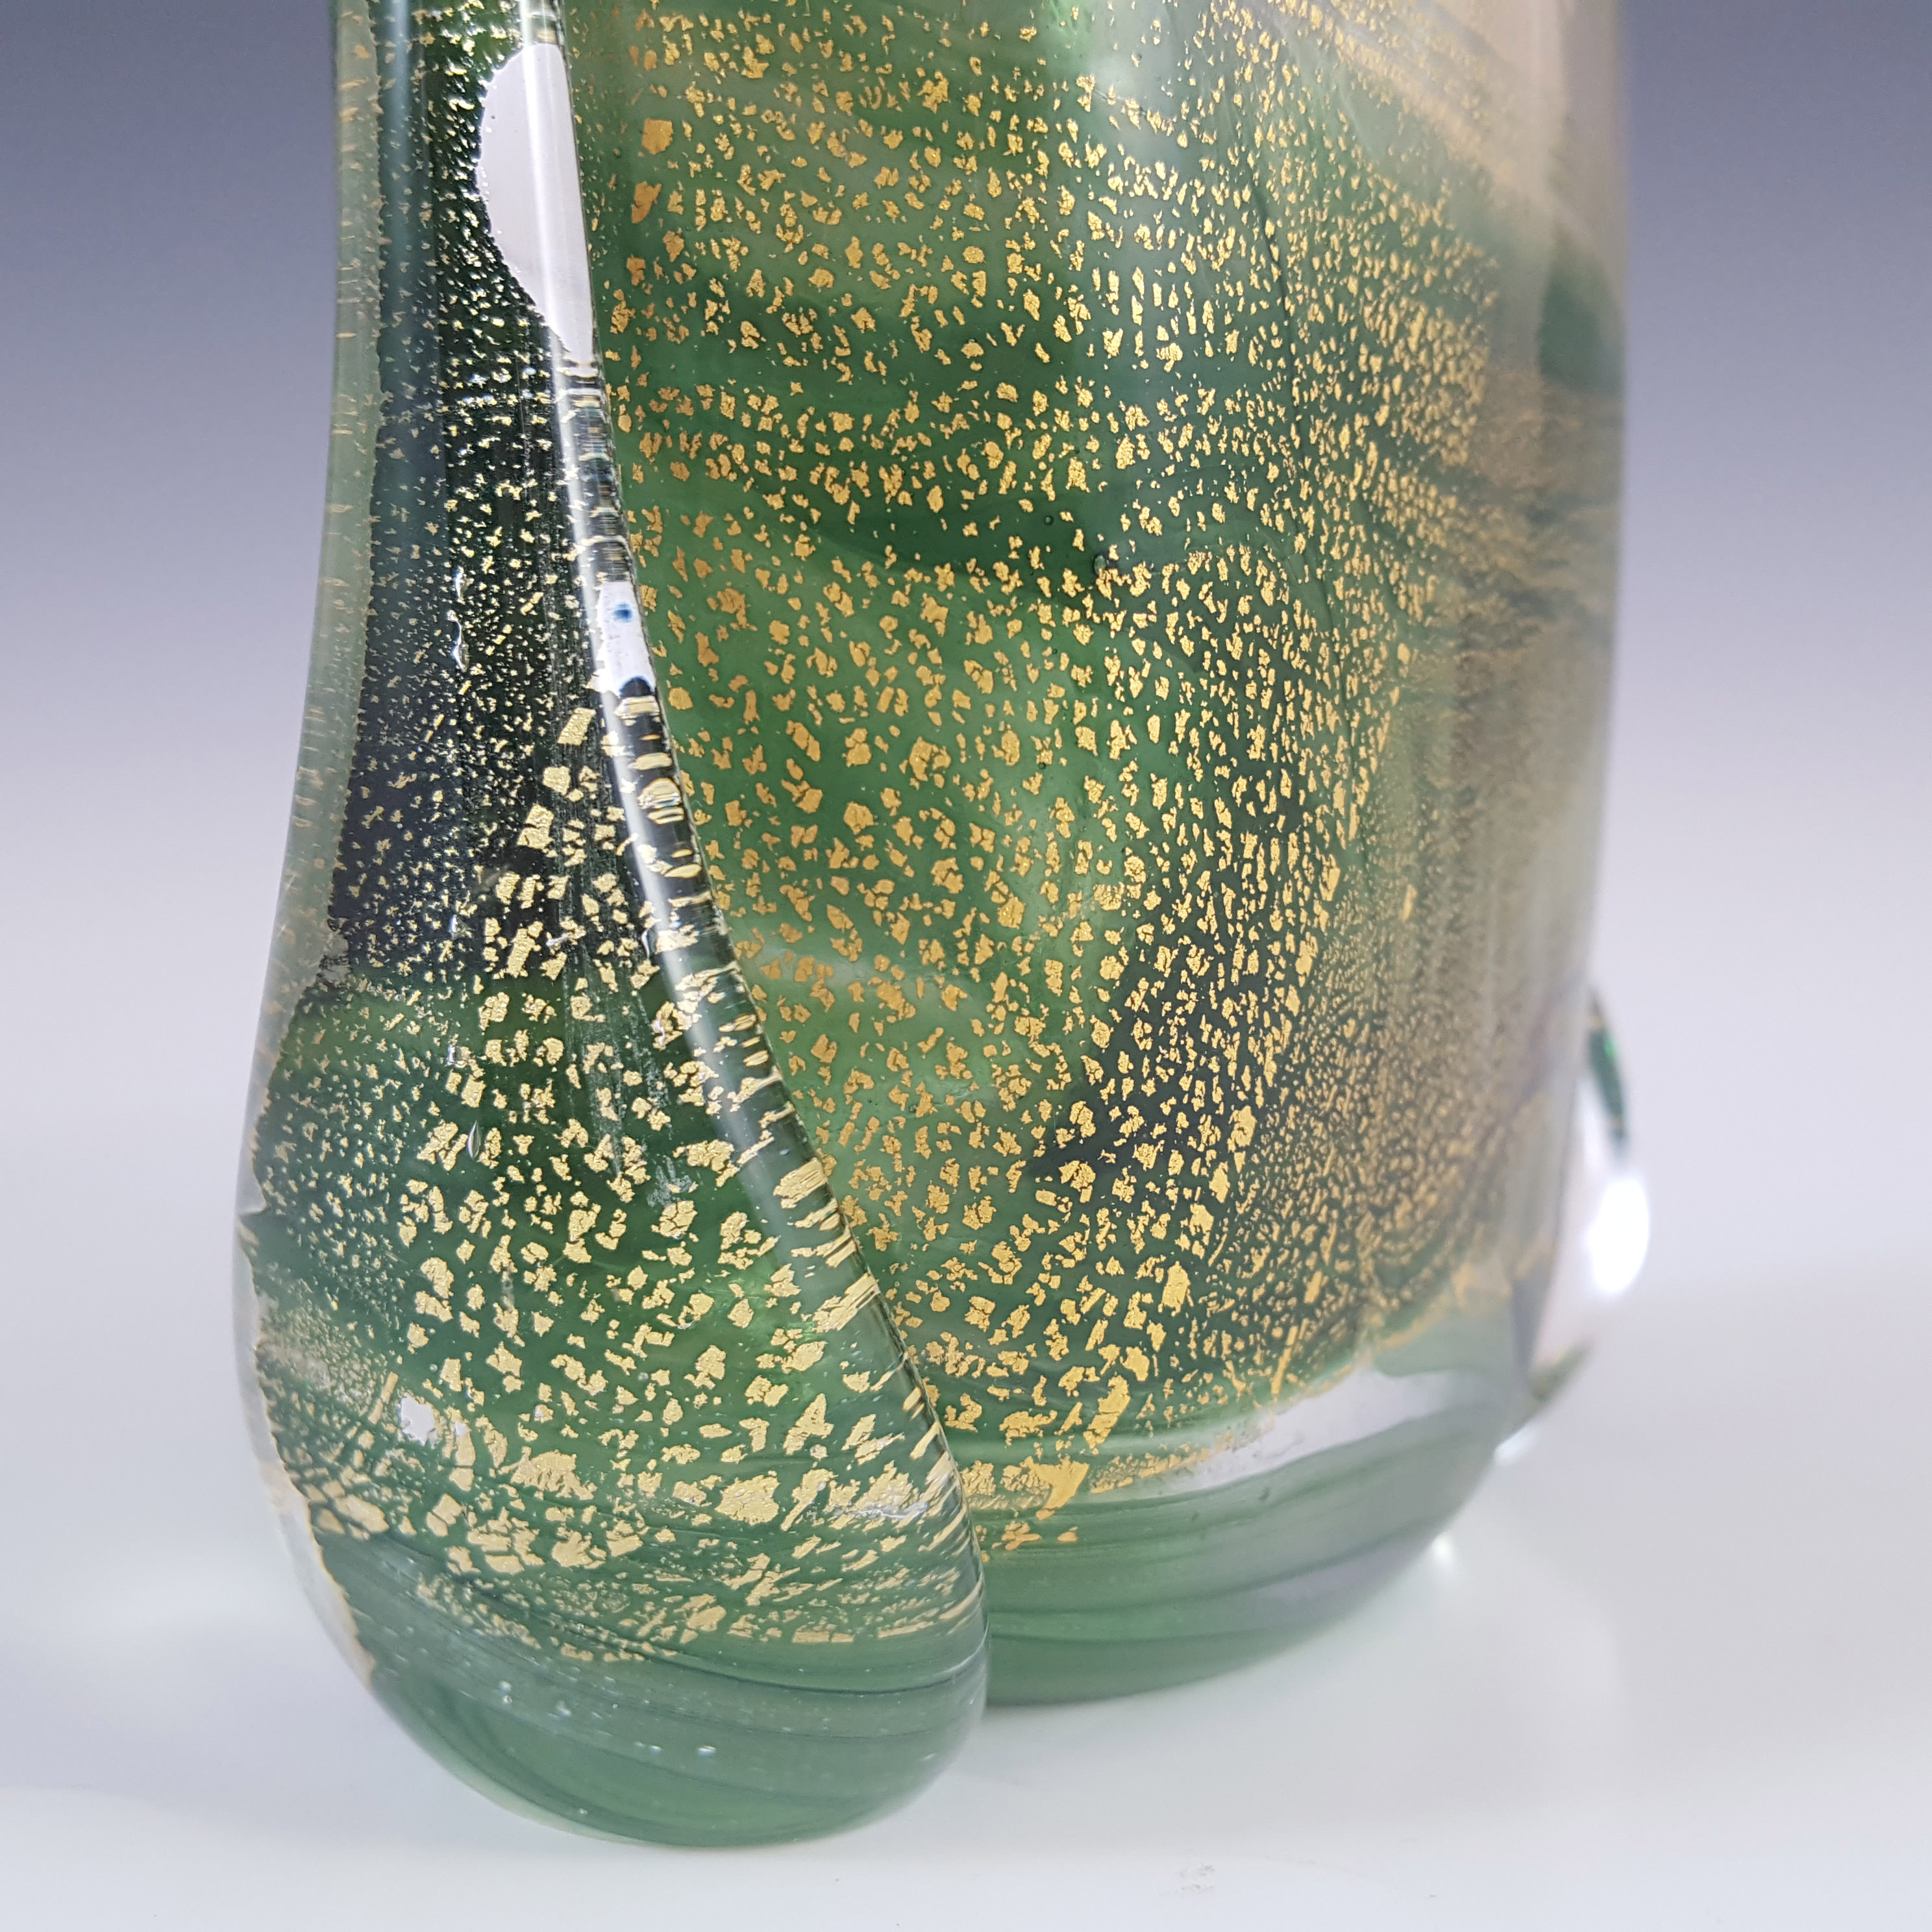 SIGNED Gozo Maltese Green Gold Leaf Glass 'Verdi' Vase - Click Image to Close